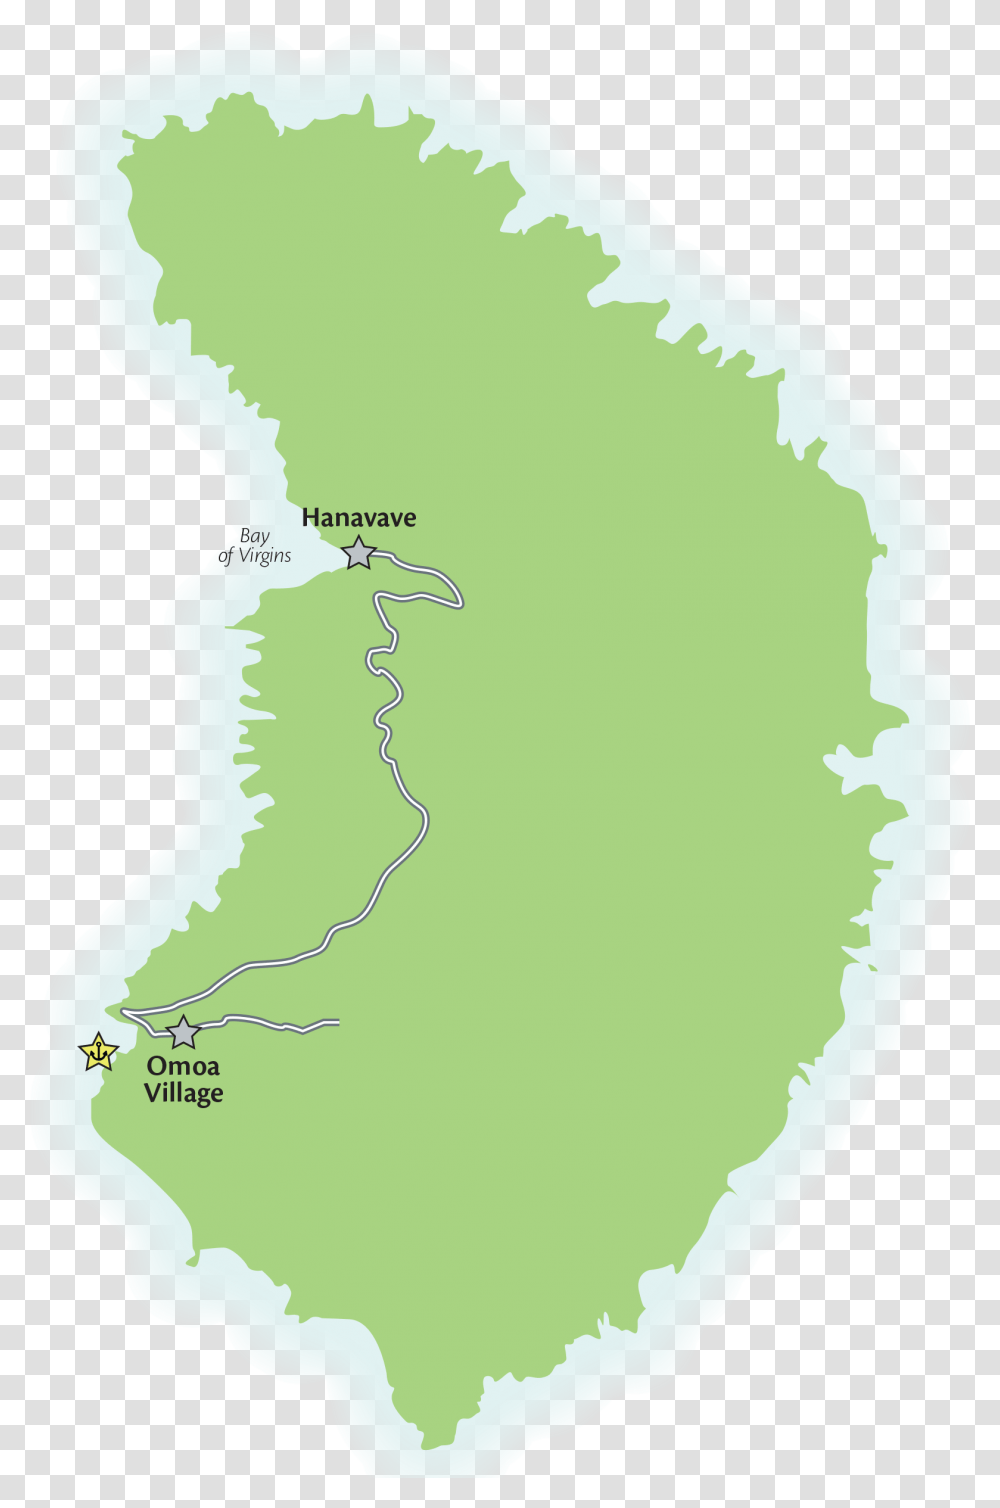 Fatu Hiva Port Map Map, Diagram, Atlas, Plot, Outdoors Transparent Png